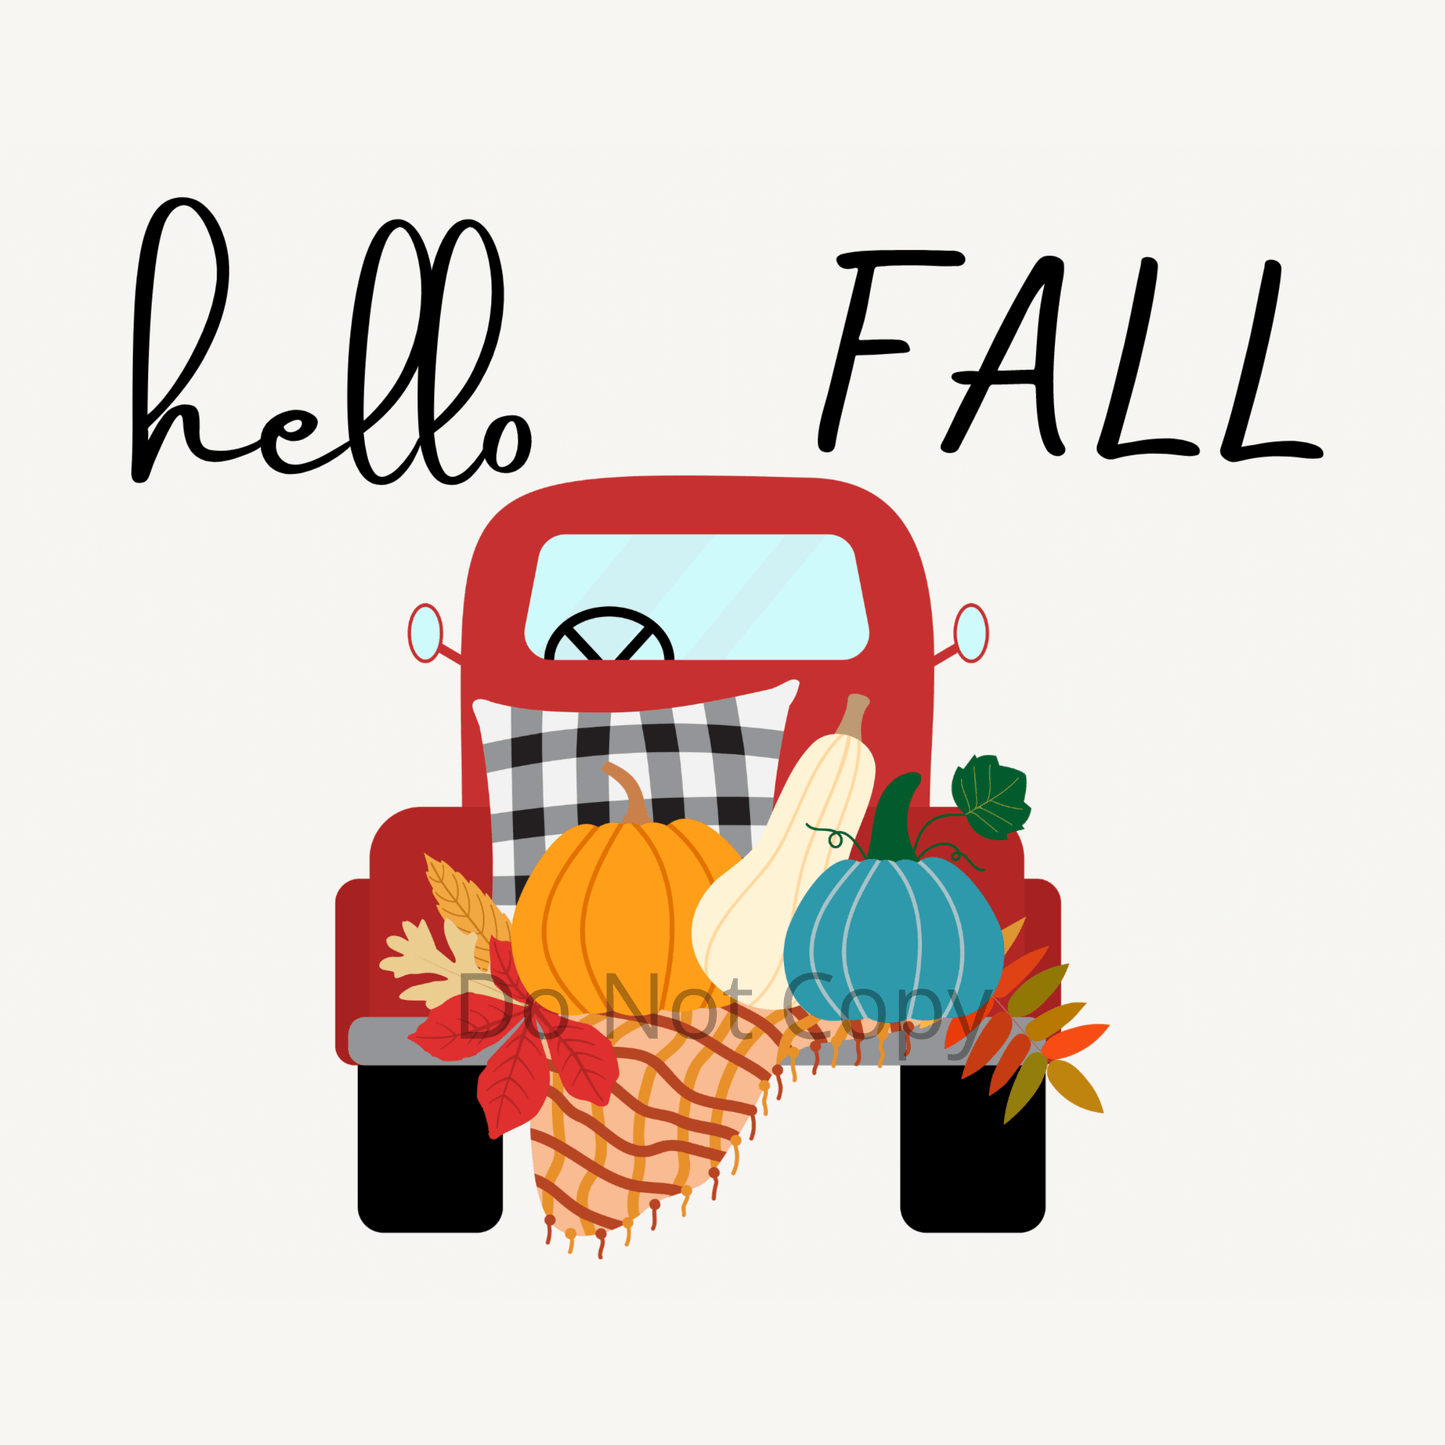 Printables: "Hello Fall" Pickup Truck w/ Autumn Pumpkins - Digital Download Fall Wall Art